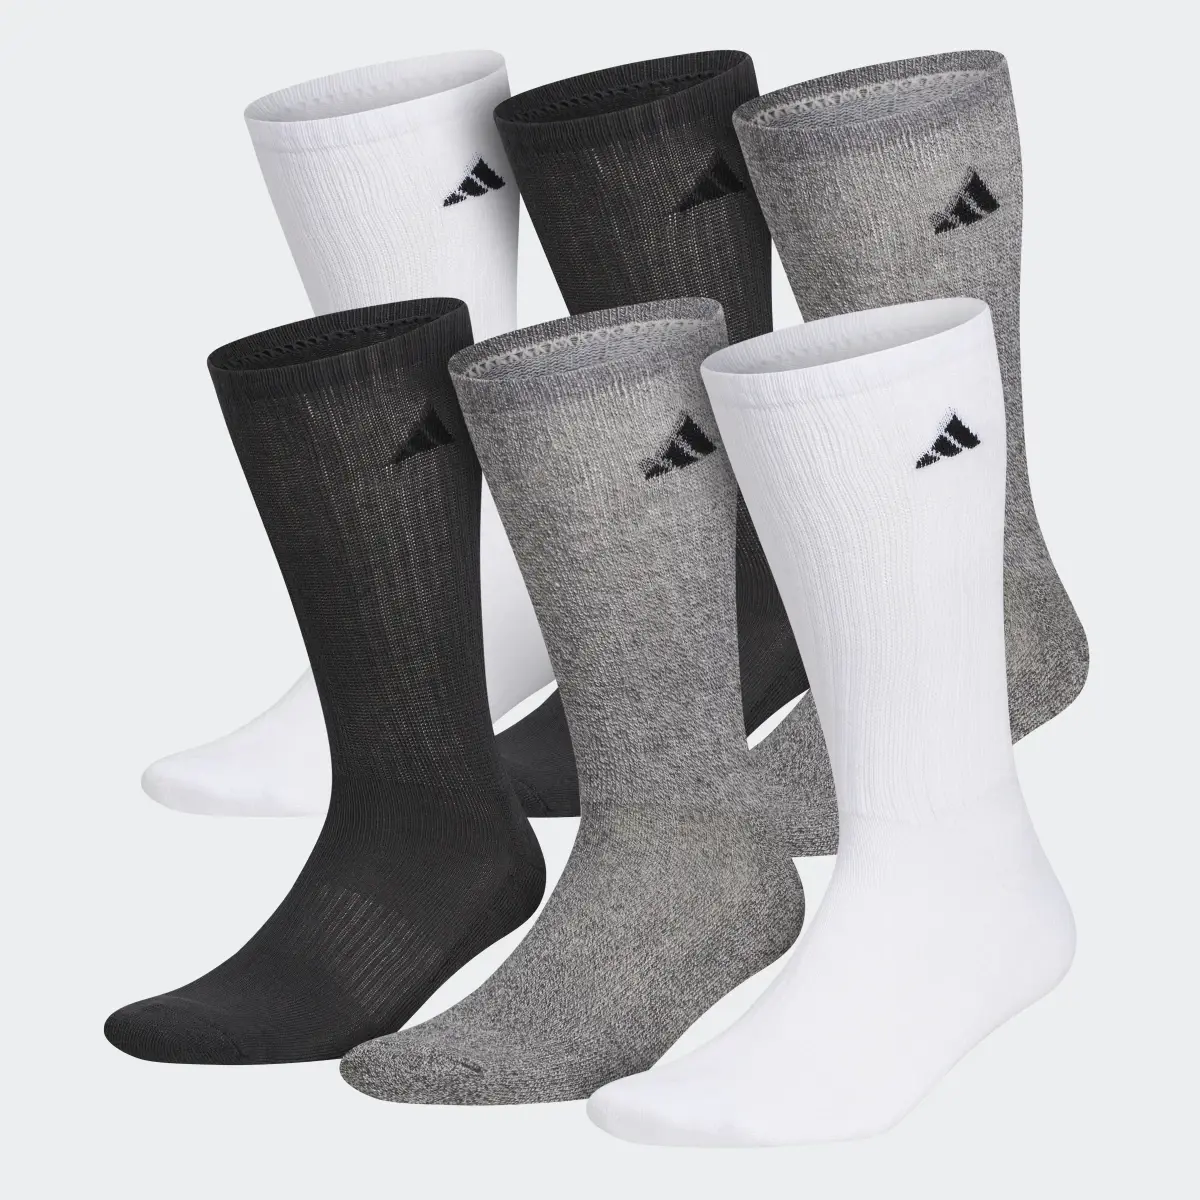 Adidas Athletic Crew Socks 6 Pairs. 1